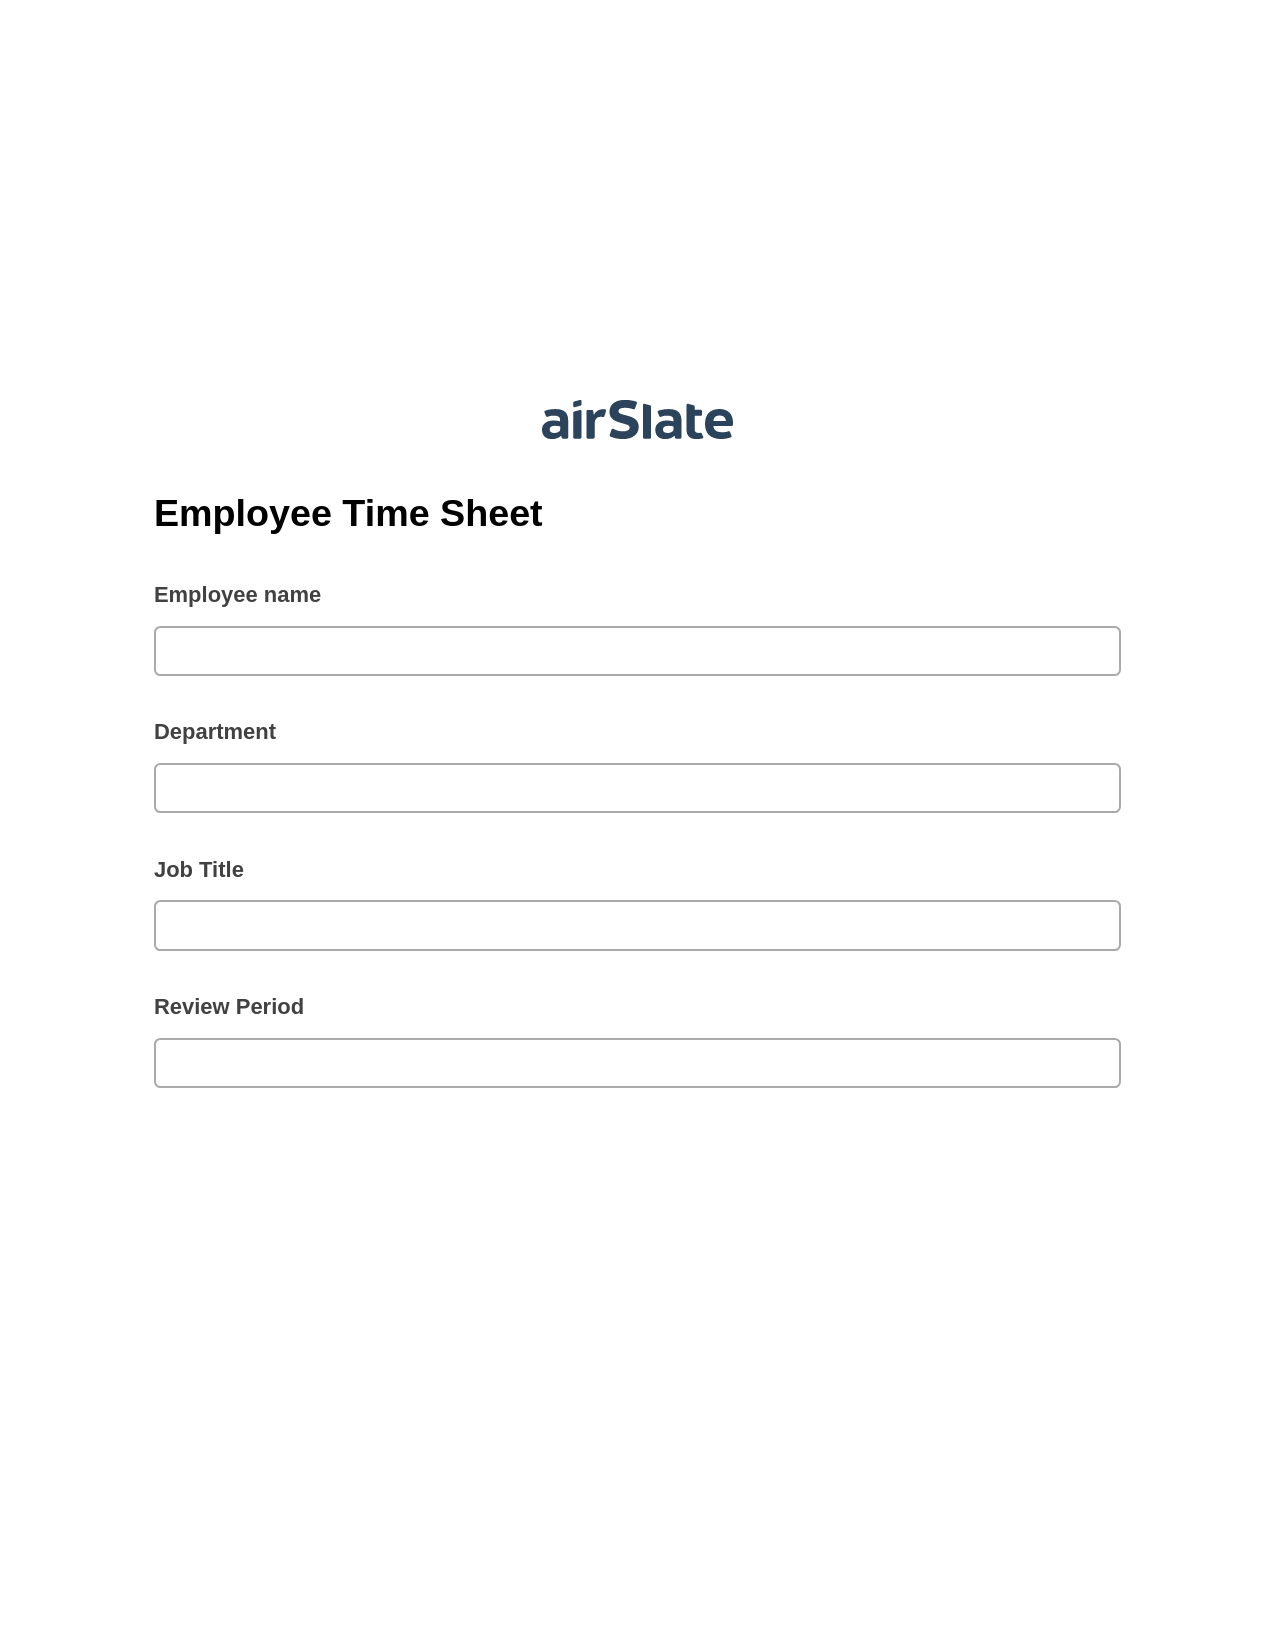 Multirole Employee Time Sheet Pre-fill from MySQL Bot, Create slate addon, Archive to Google Drive Bot